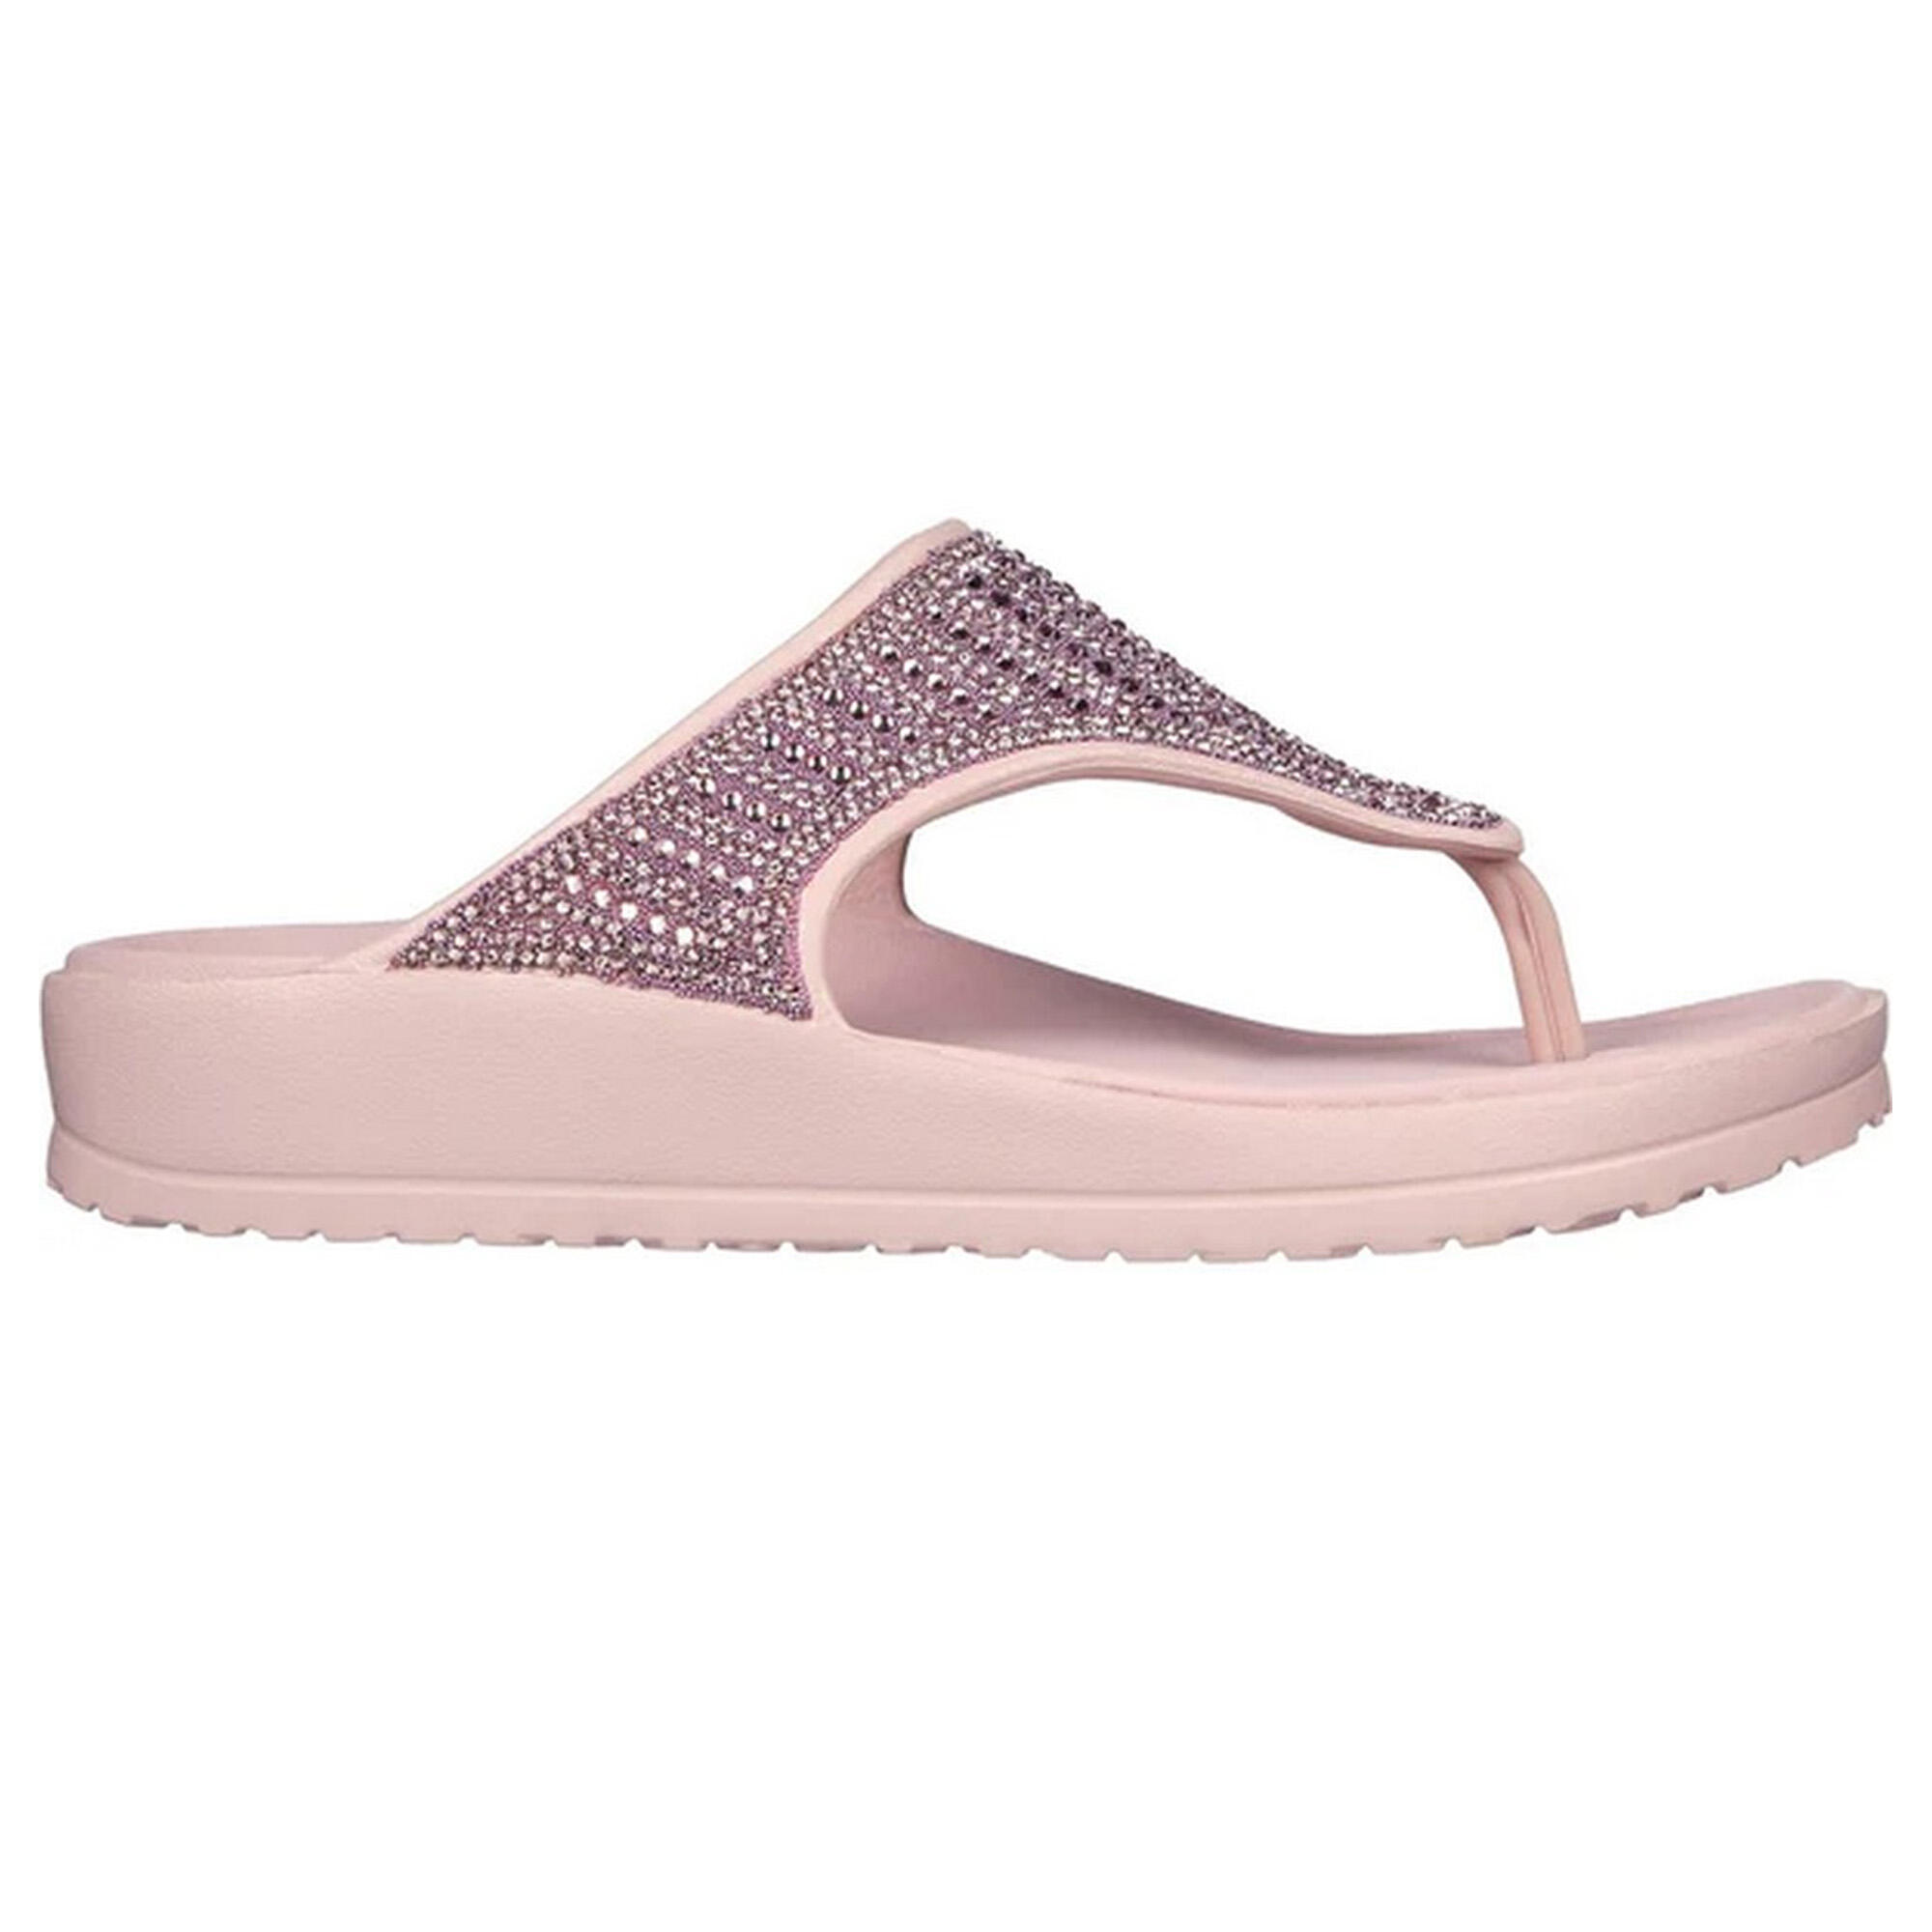 Womens/Ladies Cali Breeze 2.0 Love Glimmer Sandals (Mauve) 3/5